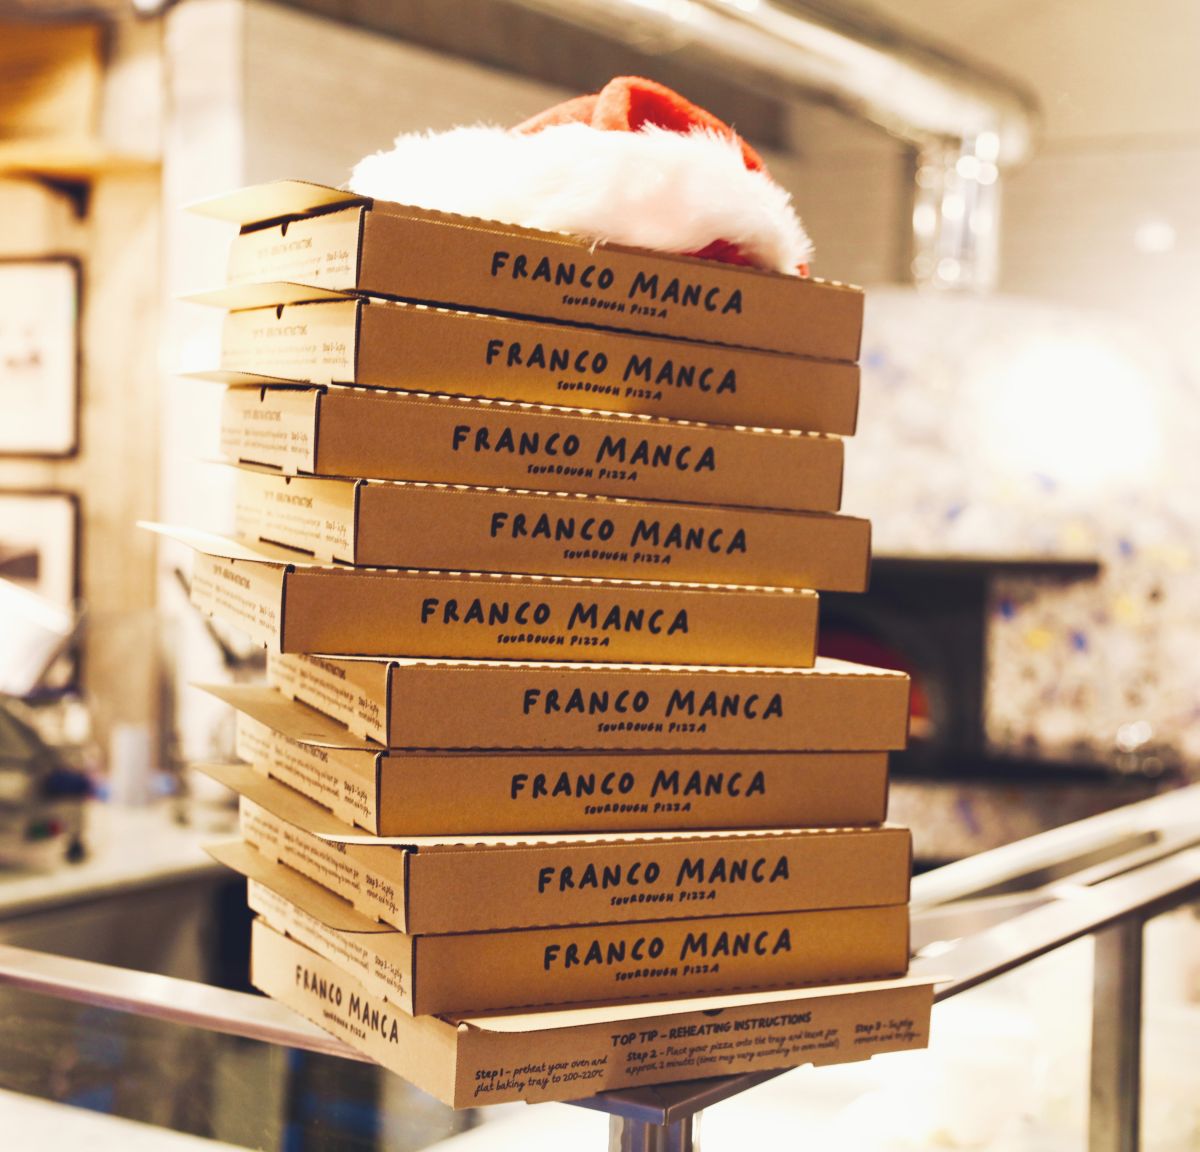 Franco Manca’s 40,000 Pizza Pledge for the Homeless